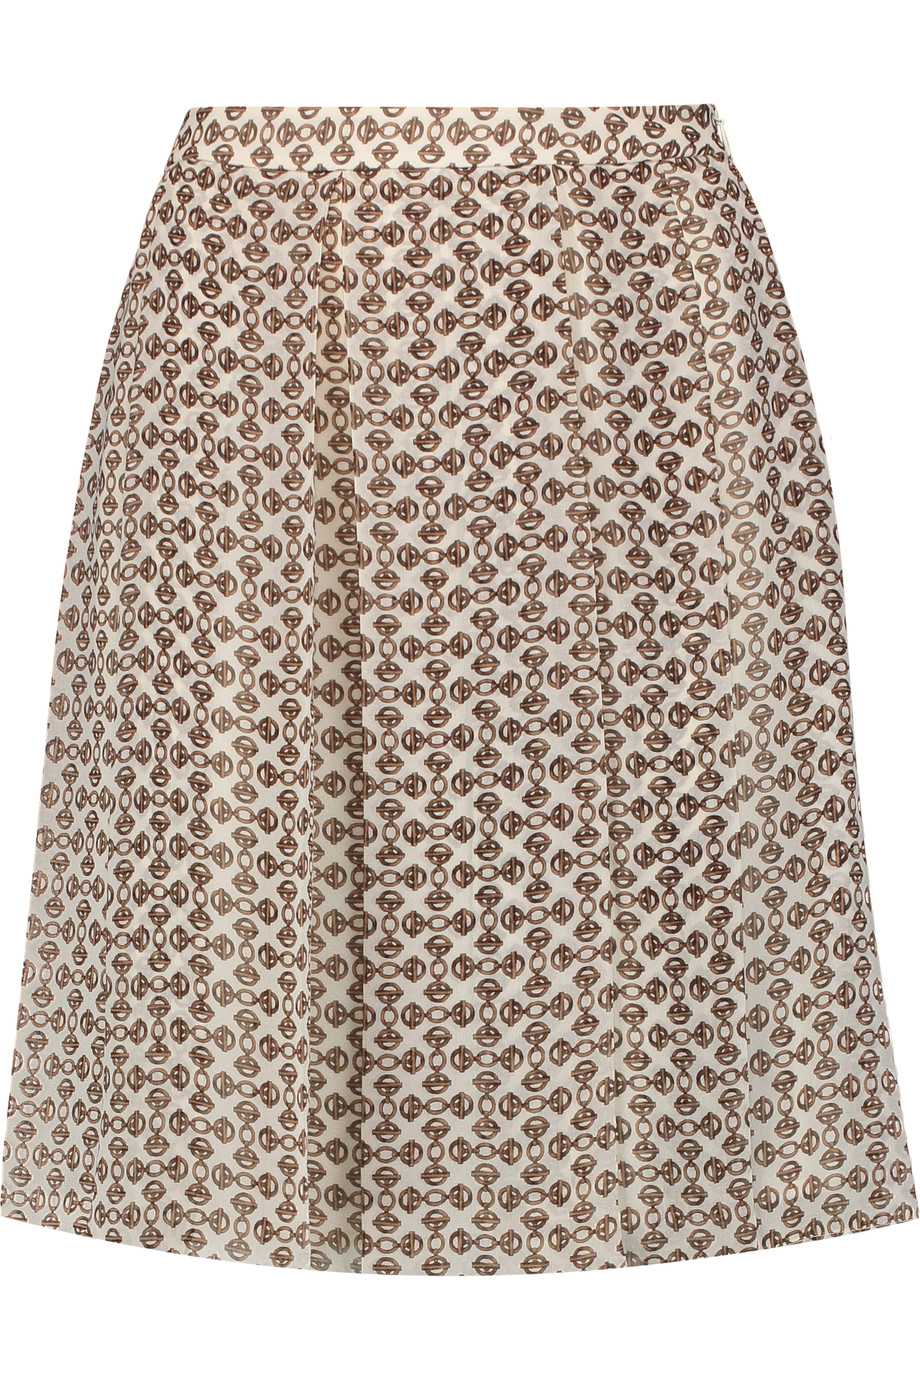 Tory Burch Pleated Printed Silk-chiffon Skirt | ModeSens